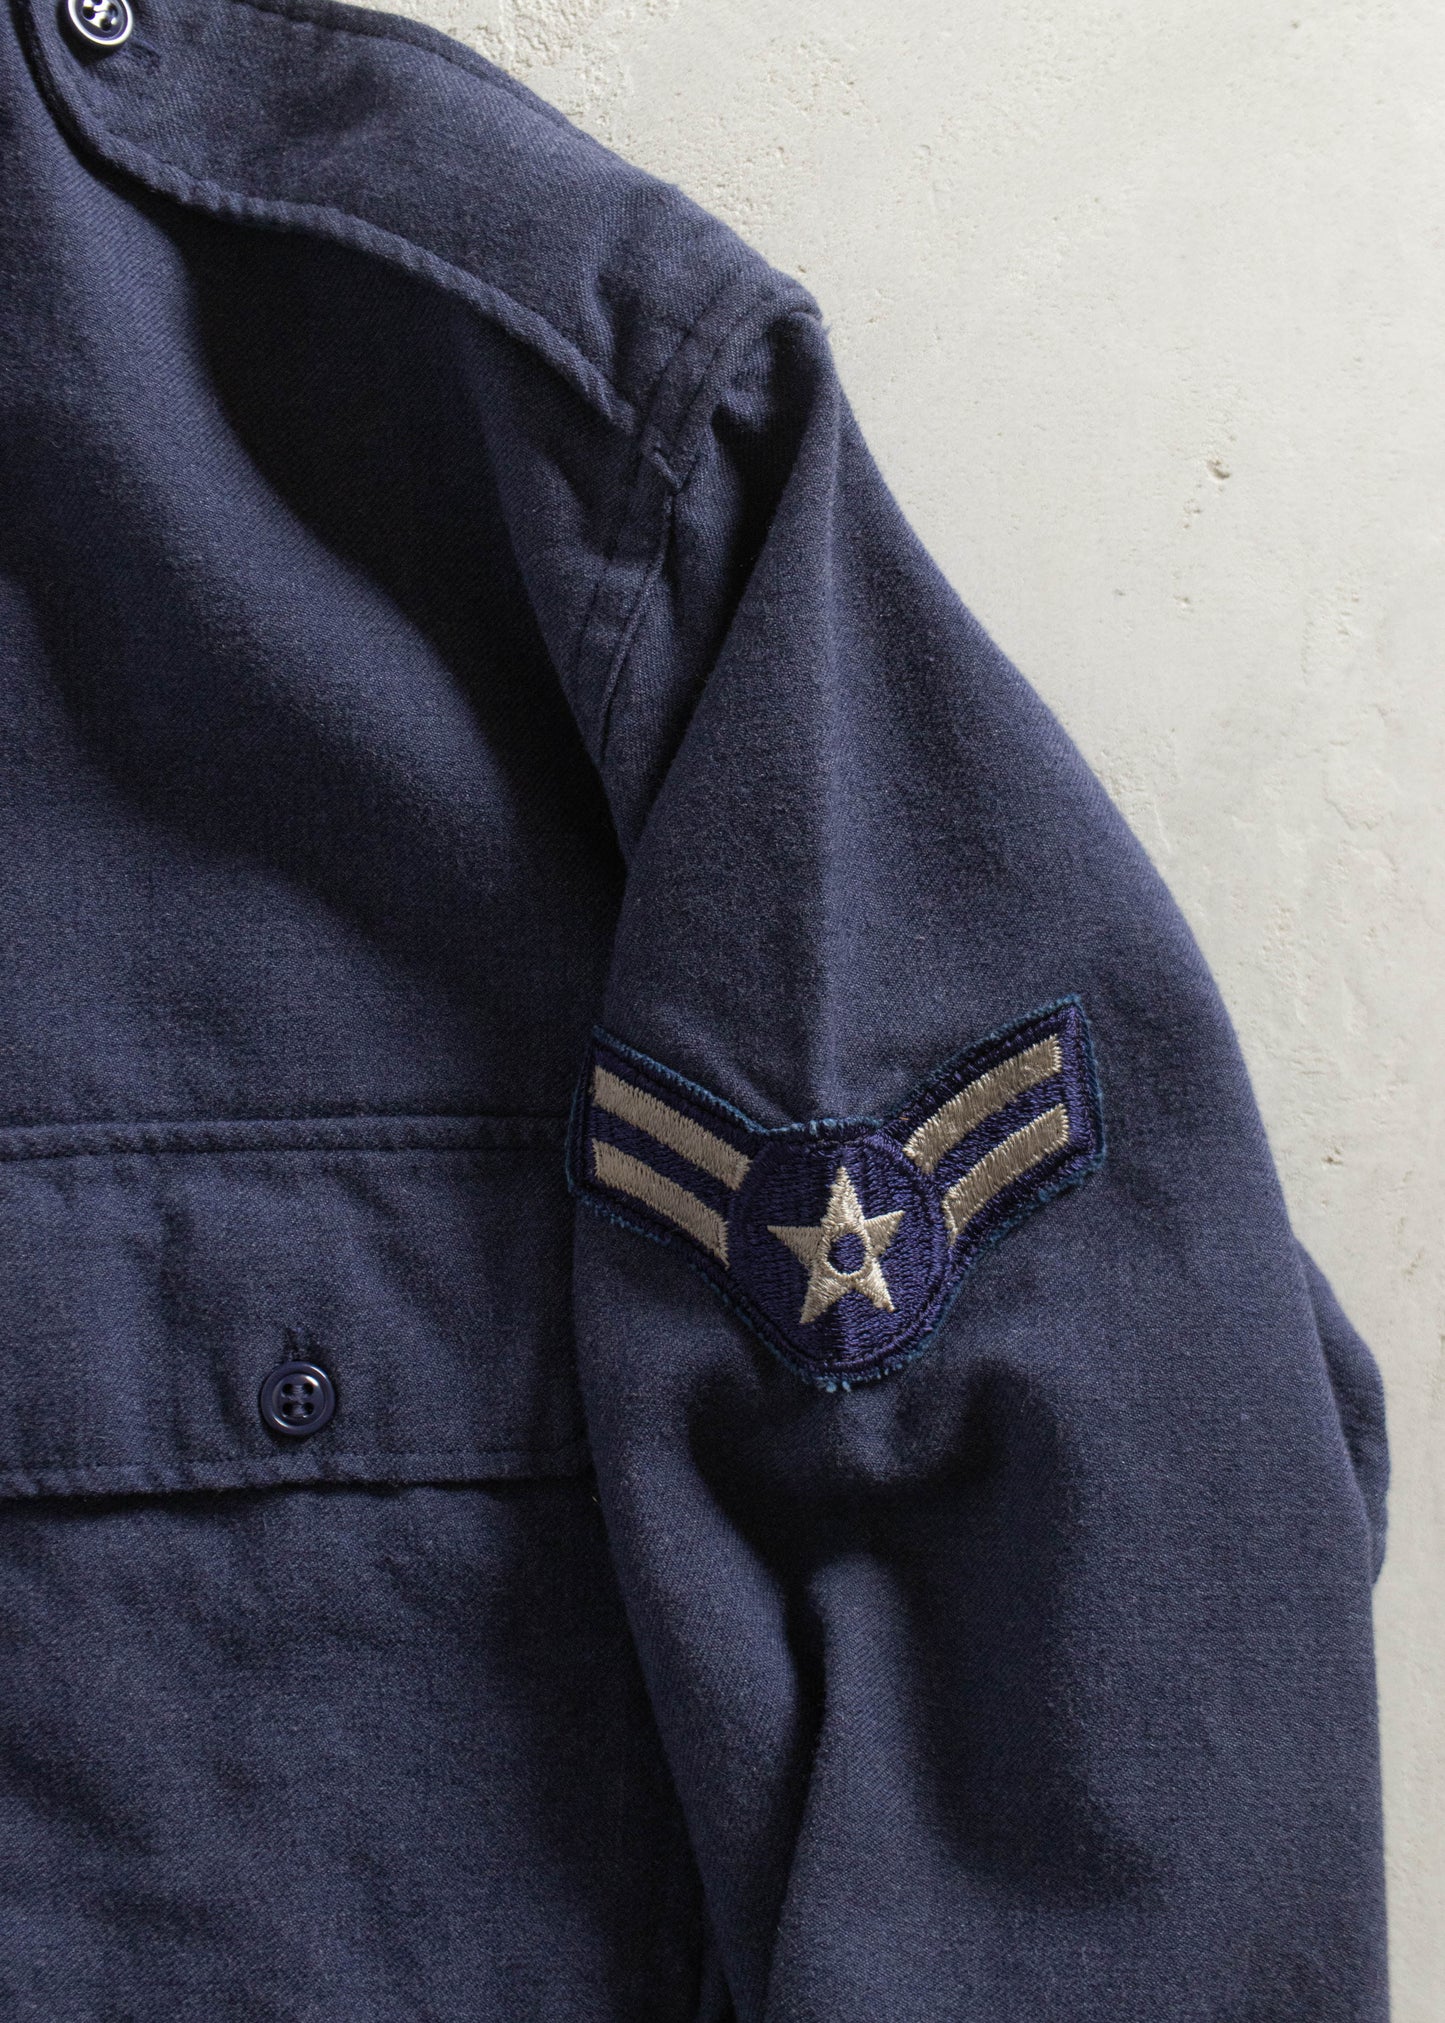 Vintage 1980s US Air Force Long Sleeve Button Up Uniform Shirt Size S/M